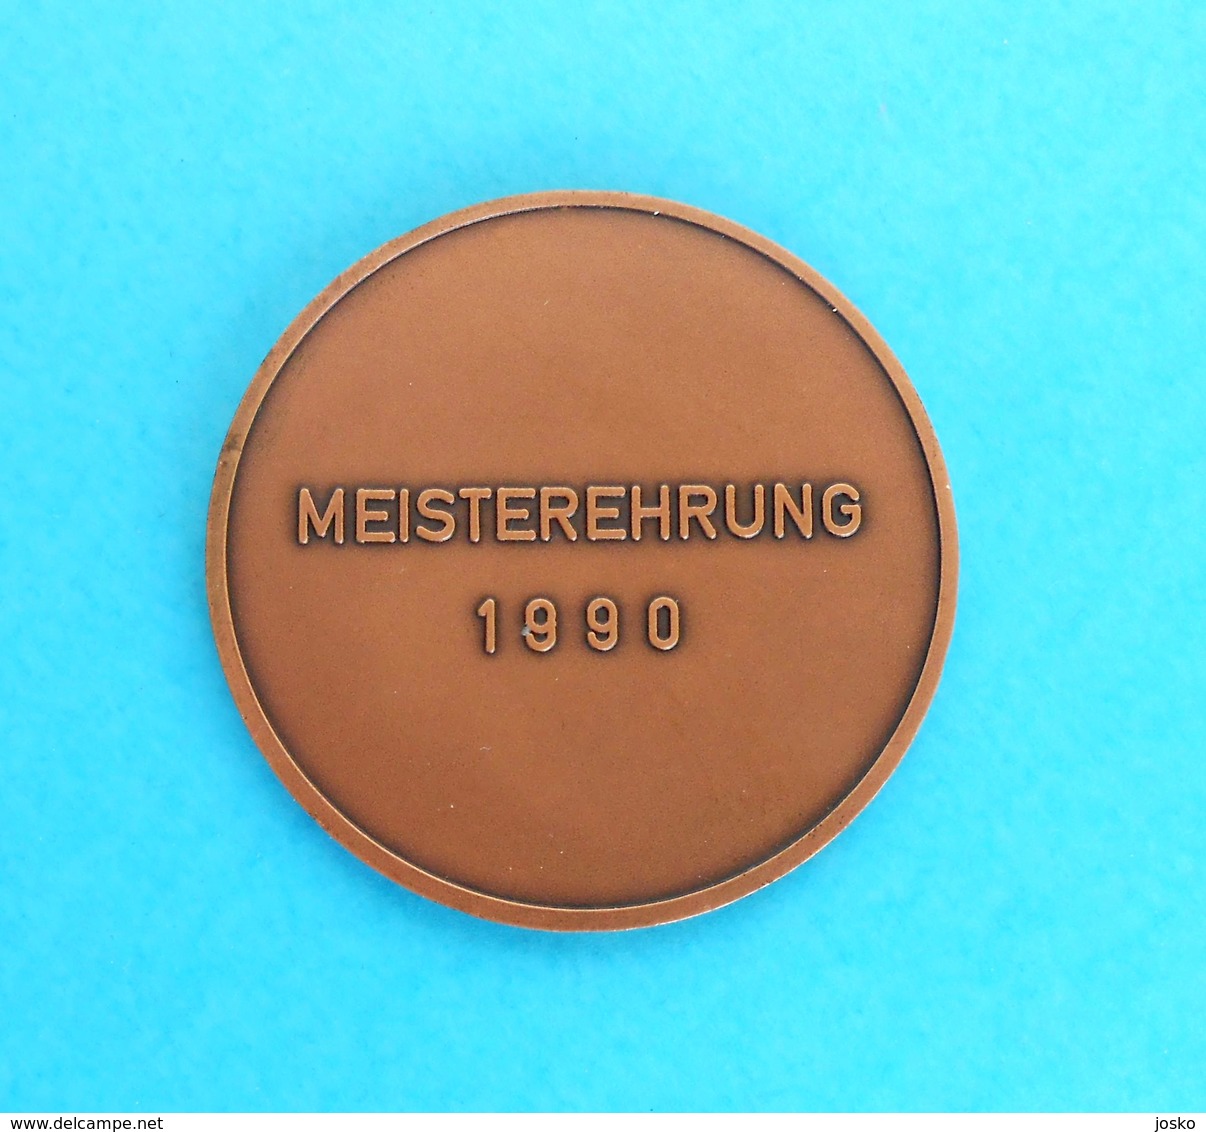 ARCHERY & SHOOTING Germany Medal Württembergischer Schützenverband 1850 EV Stuttgart, Deutschland * Tir à L'arc Tournage - Archery